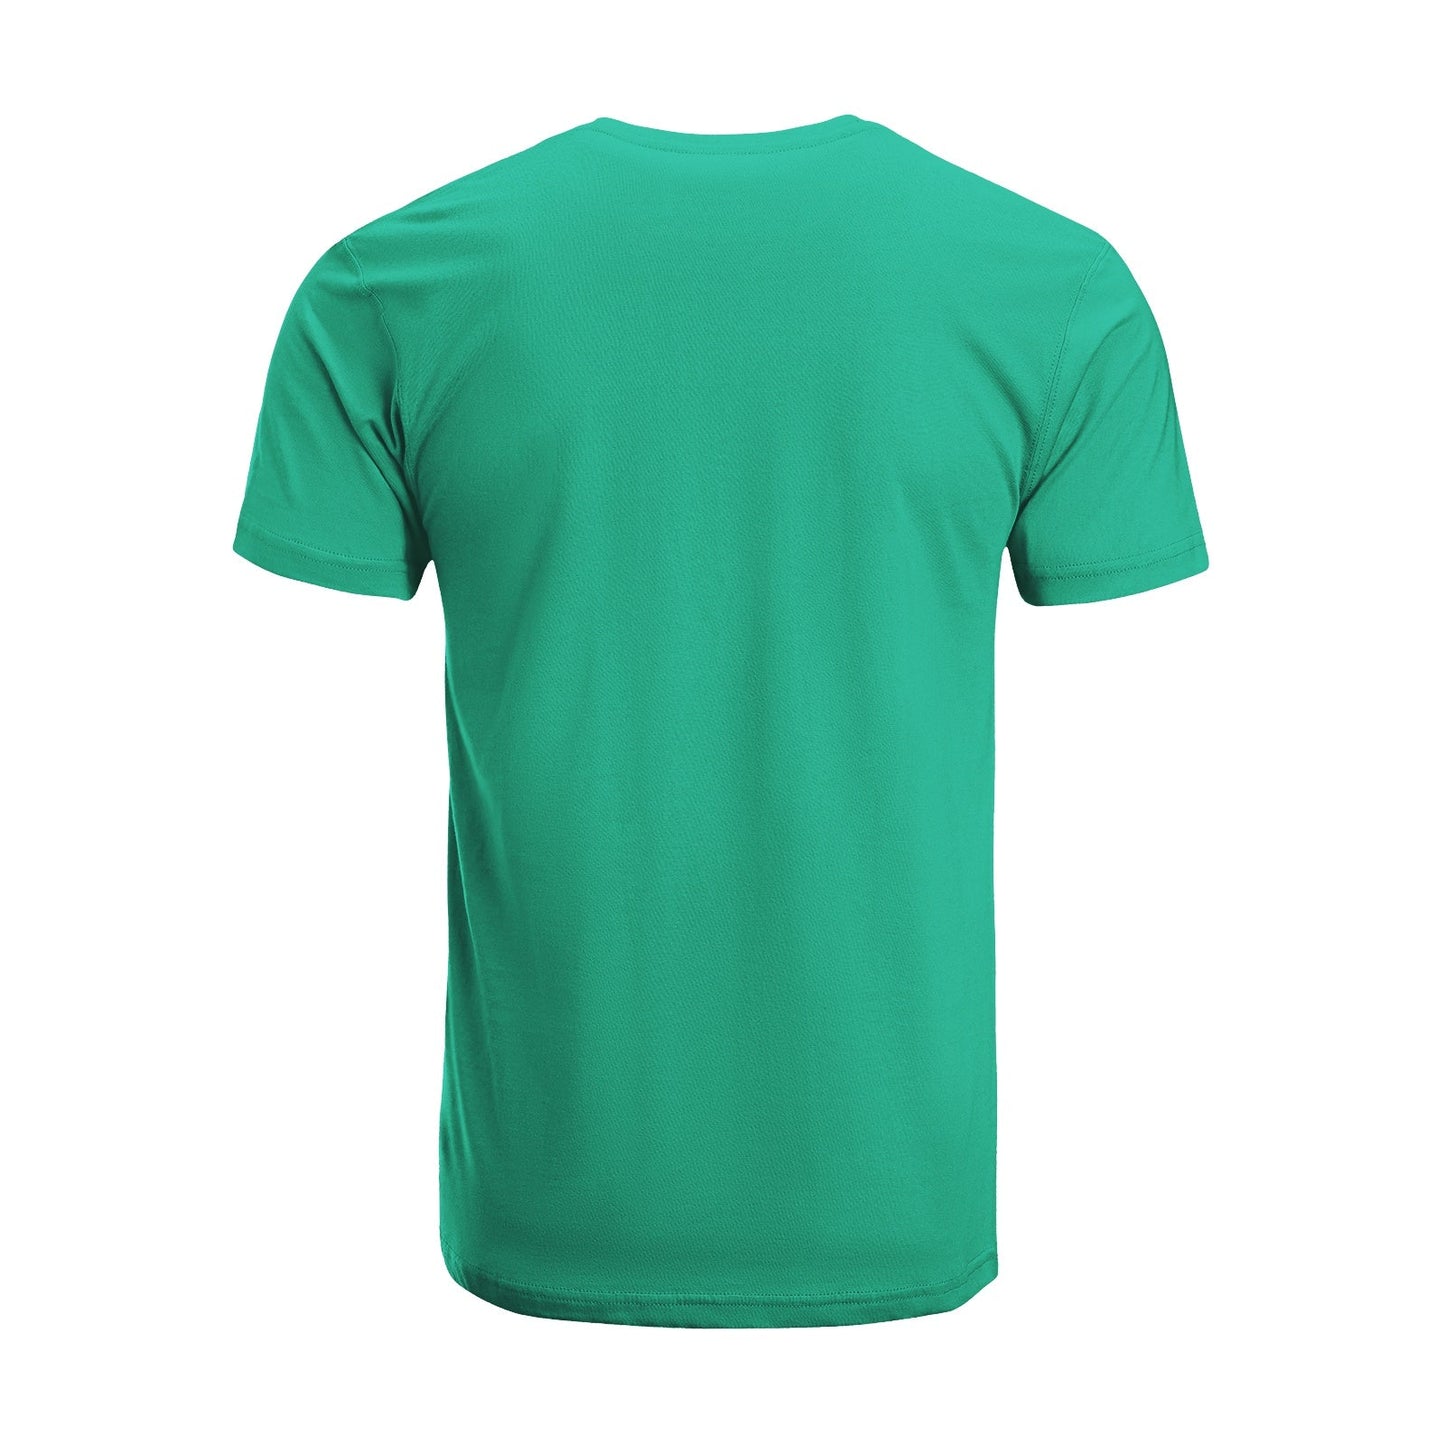 Unisex Short Sleeve Crew Neck Cotton Jersey T-Shirt USA 14